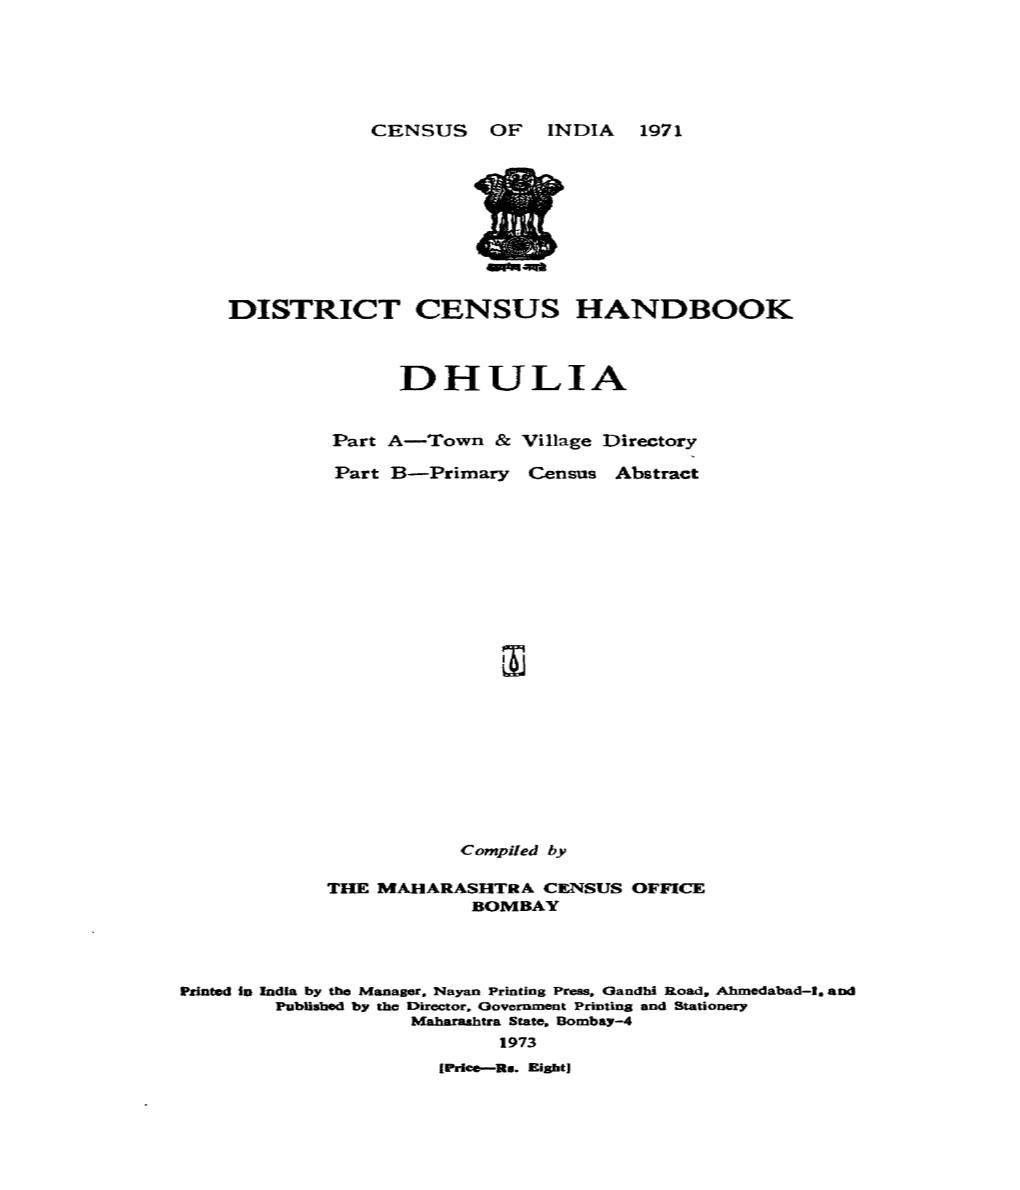 District Census Handbook, Dhulia, Part